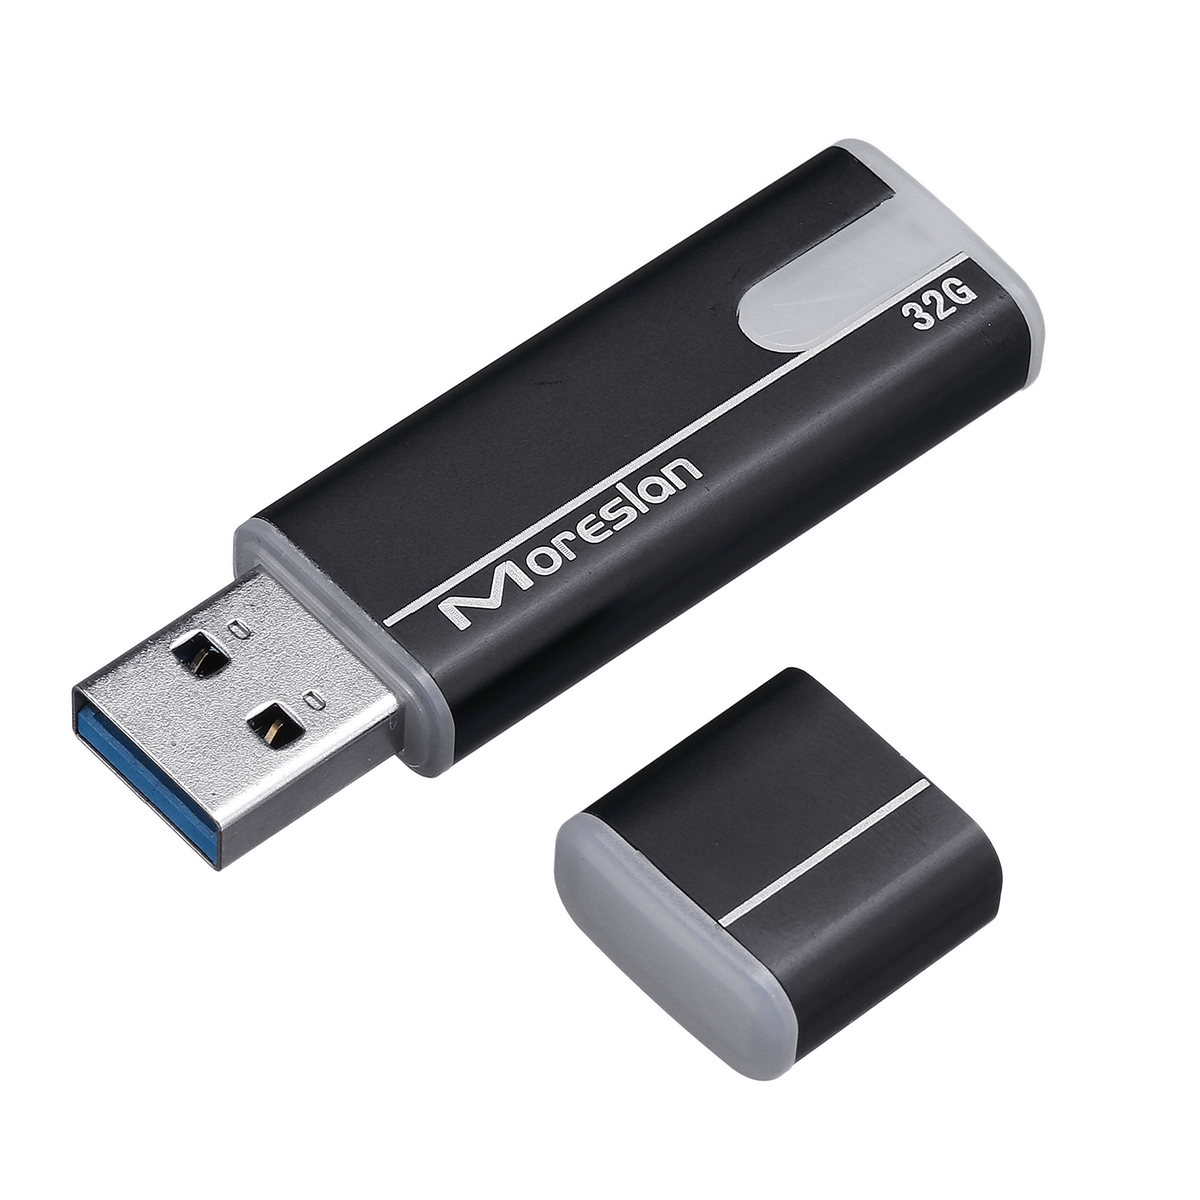 Black-USB30-Flash-Drive-64G-Portable-USB-Pen-Drive-Memory-Stick-USB-Disk-for-Desktop-PC-Laptop-1973244-1